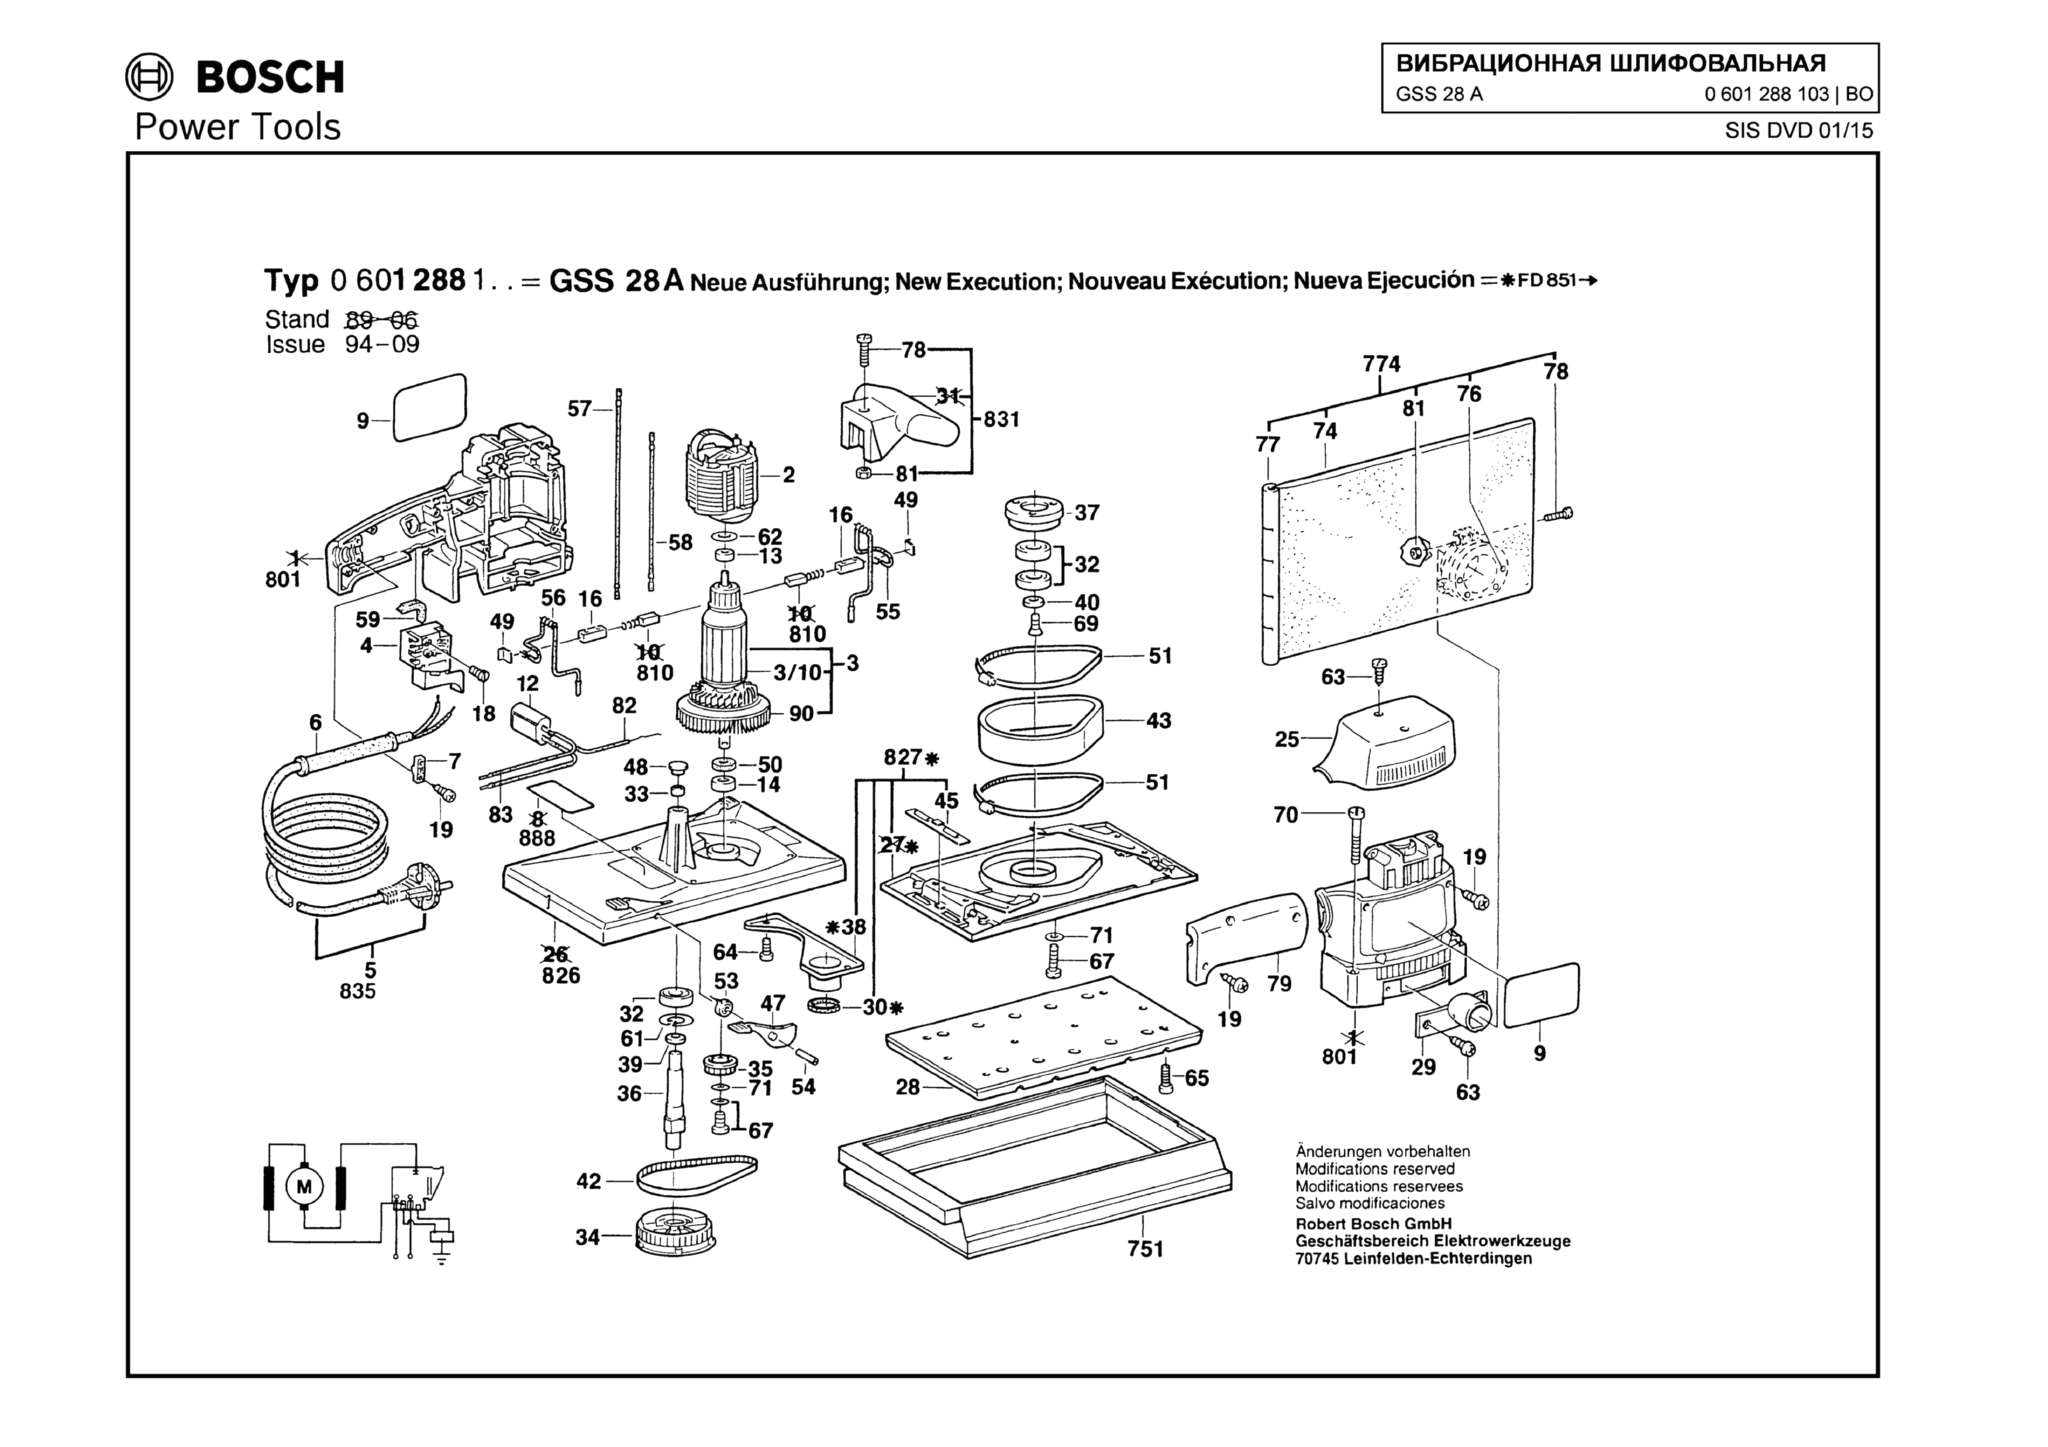 Запчасти, схема и деталировка Bosch GSS 28 A (ТИП 0601288103)